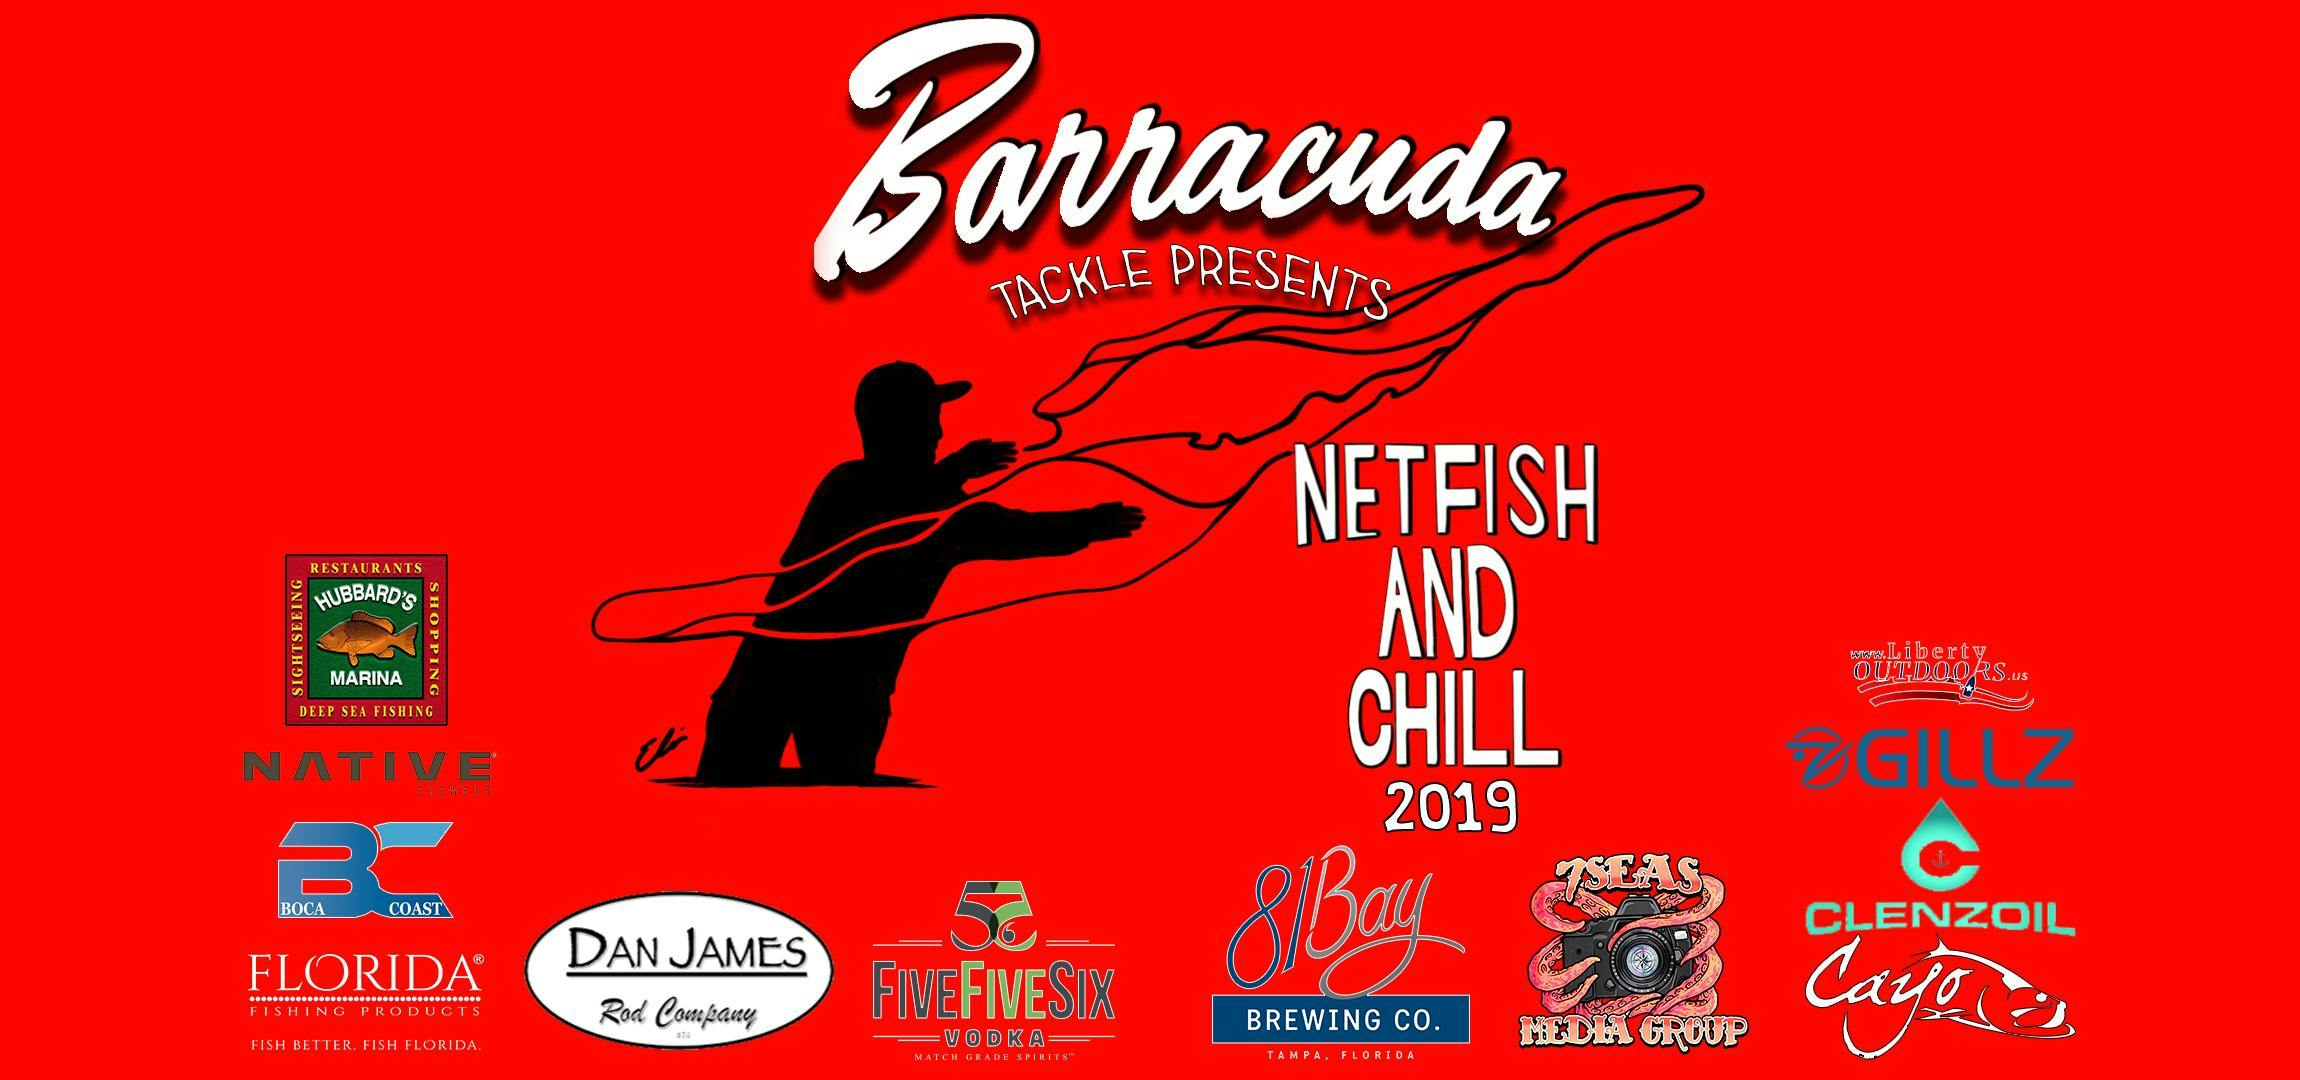 Barracuda Tackle Netfish & Chill 2019